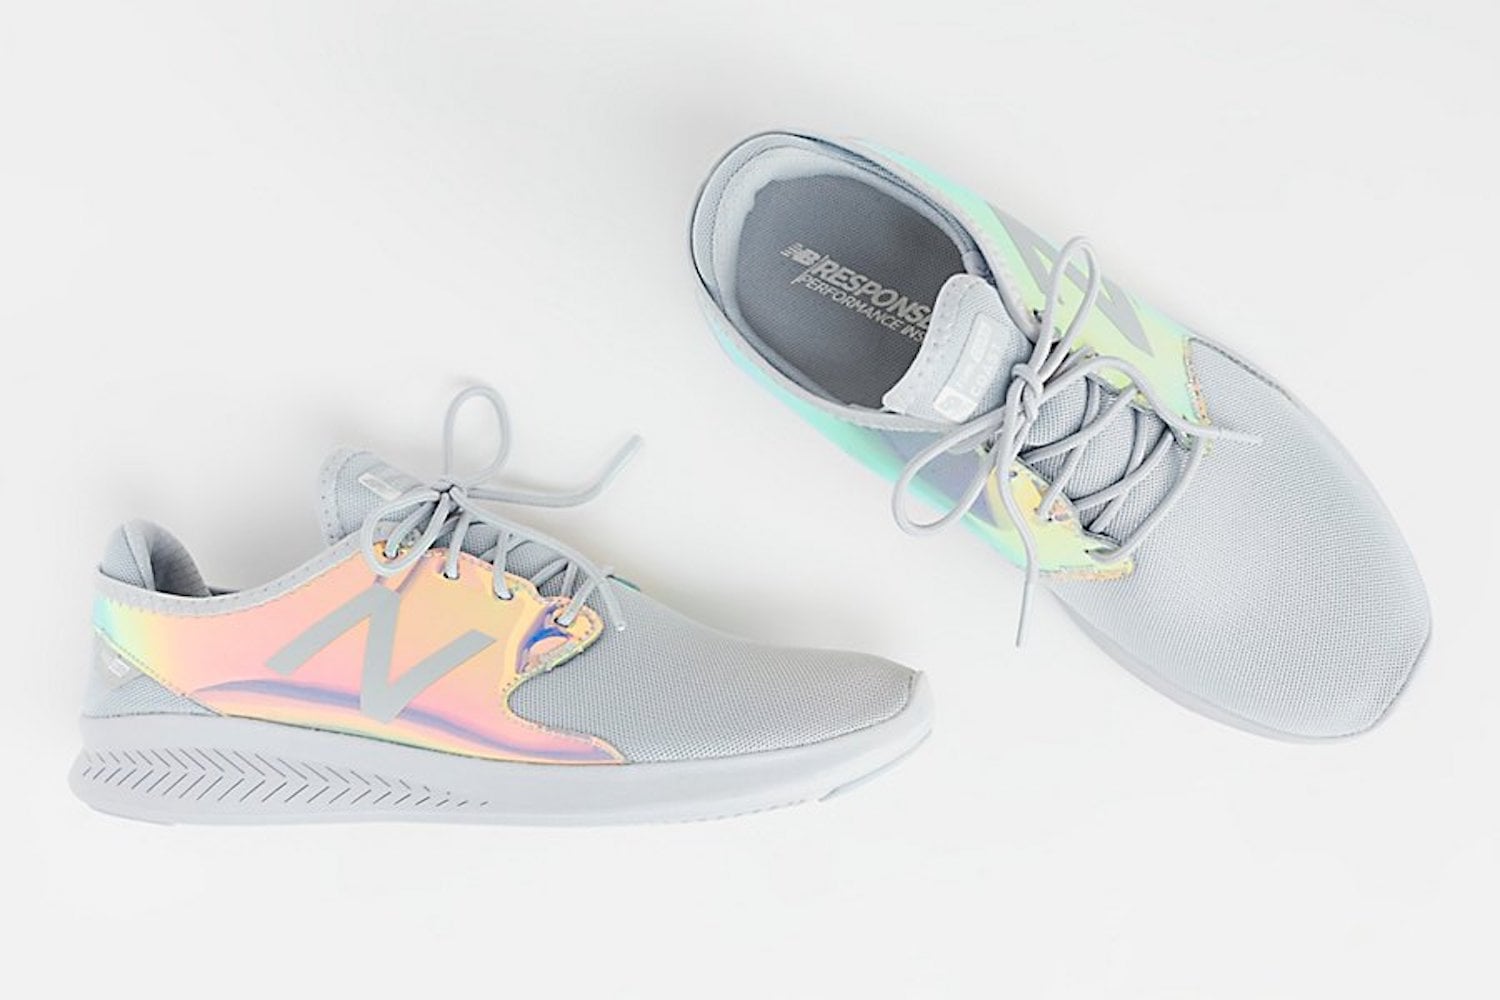 New Balance Iridescent Sneakers 2020 